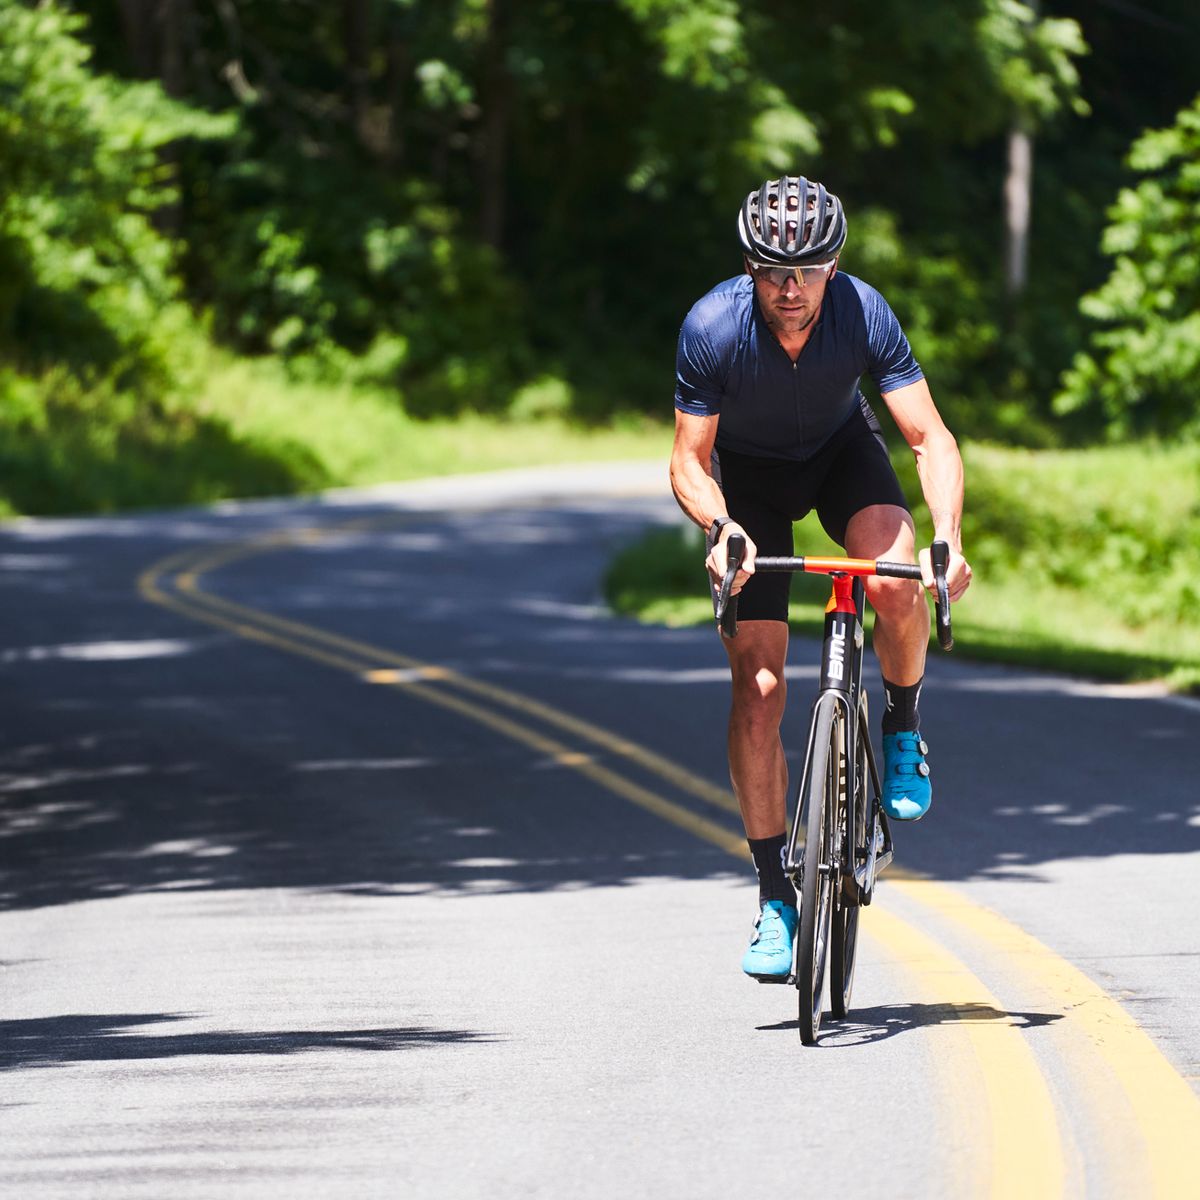 bobby lea riding a bmc road bike in pennsylvania on a training ride